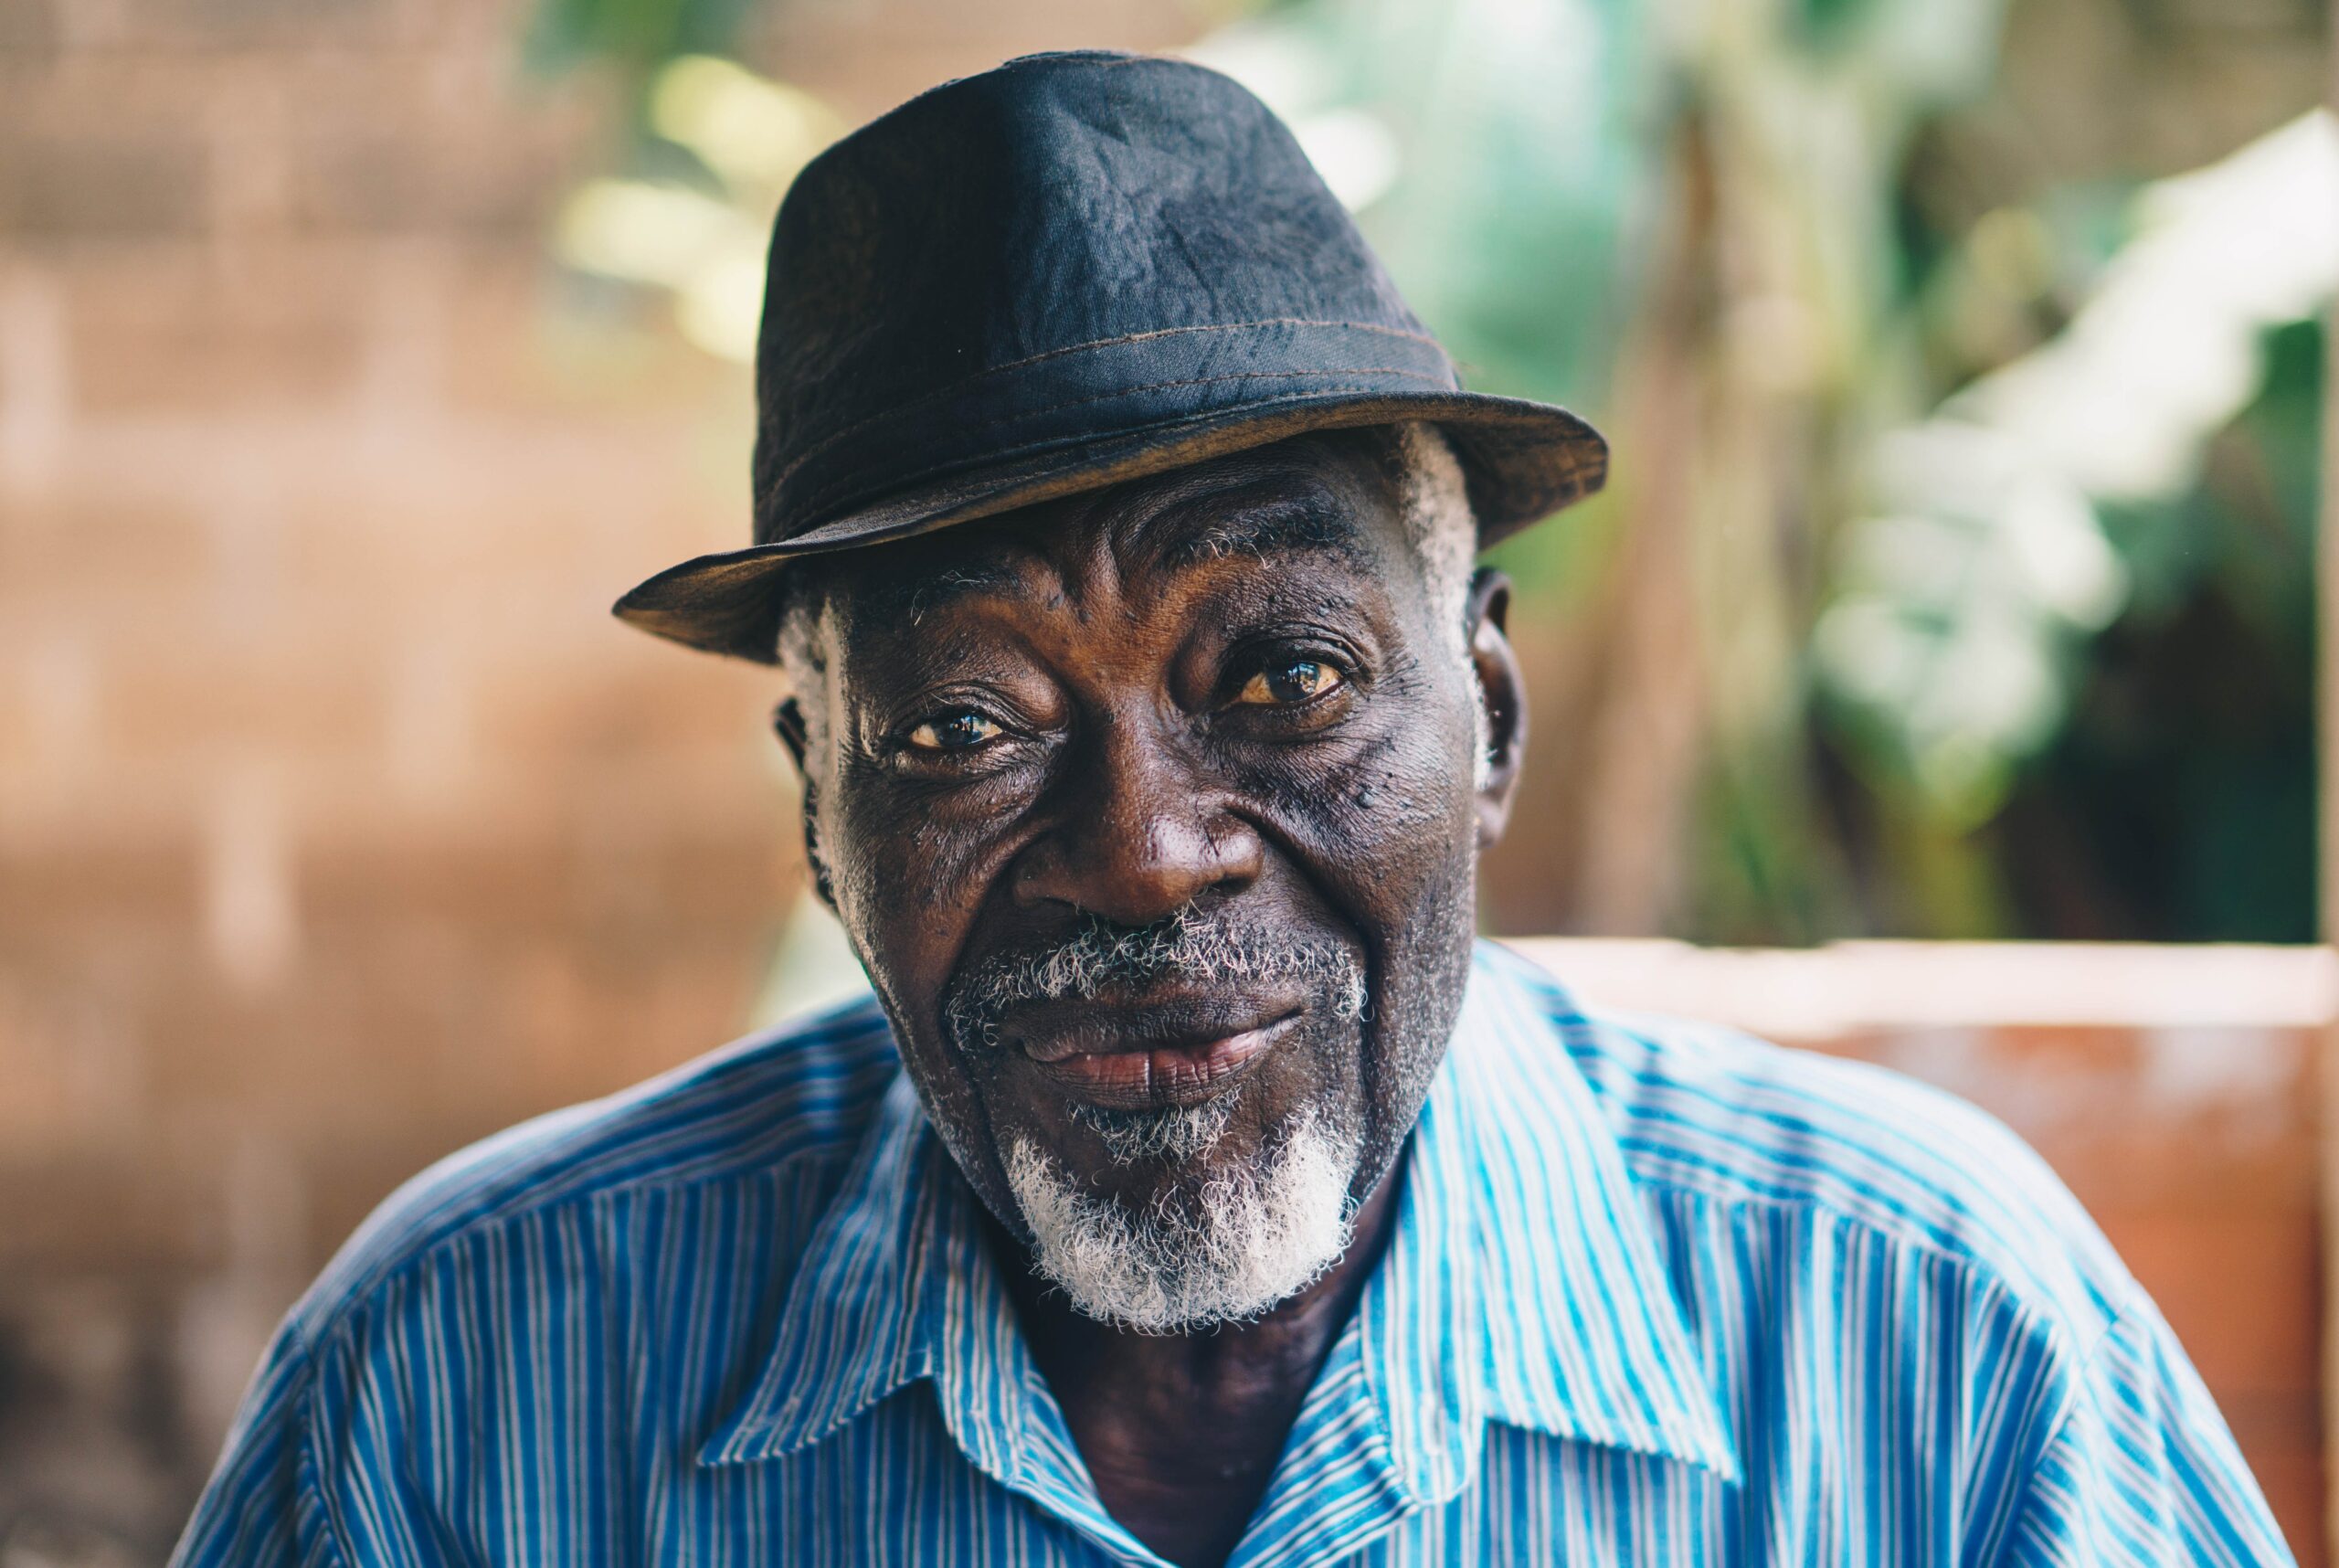 older black man wearing a hat and blue shirt.